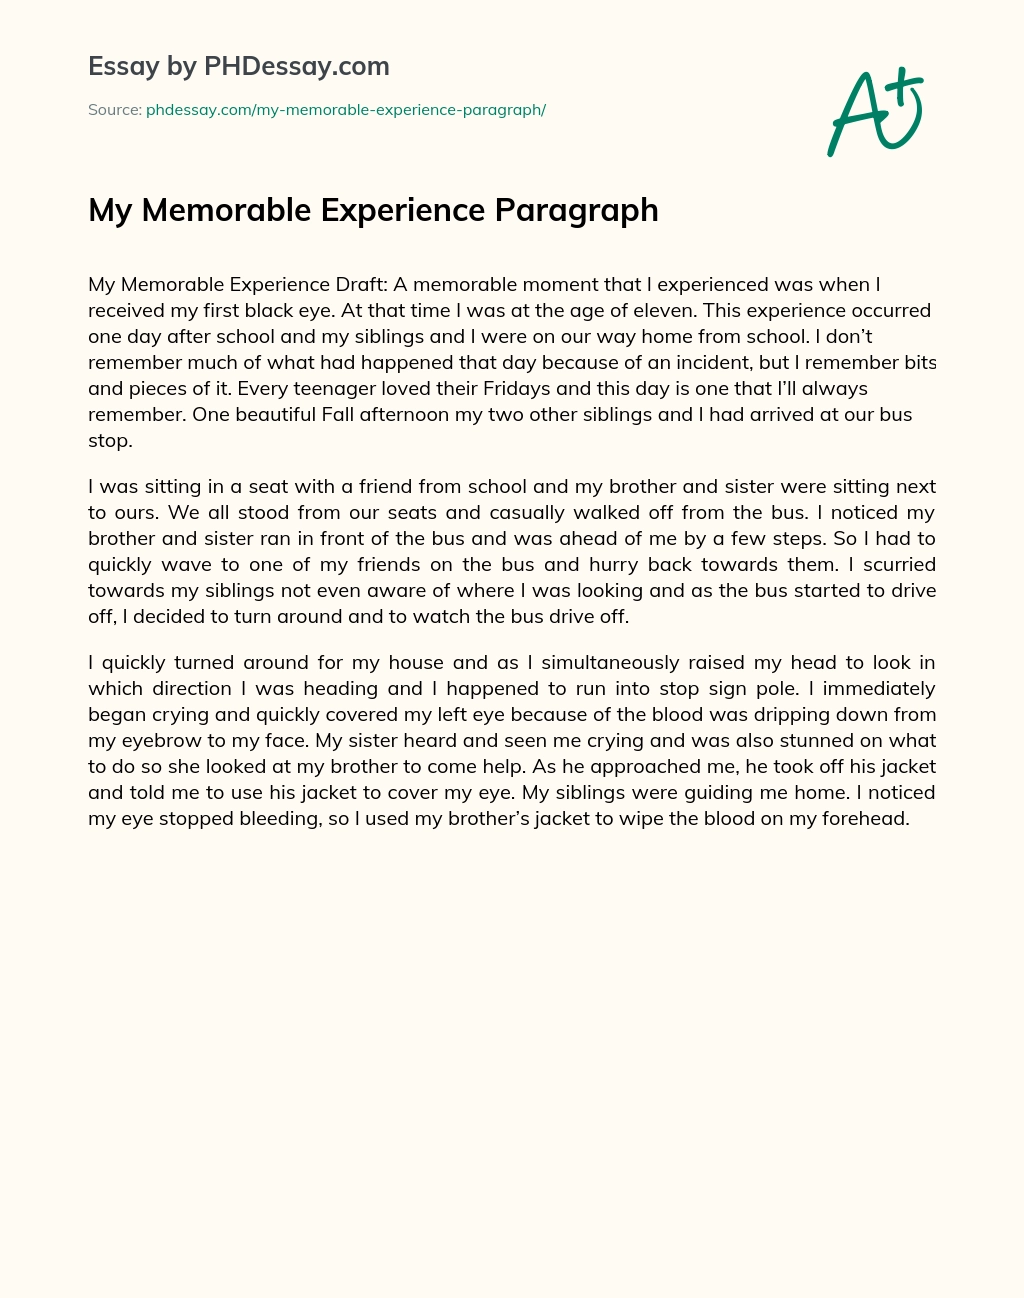 My Memorable Experience Paragraph essay